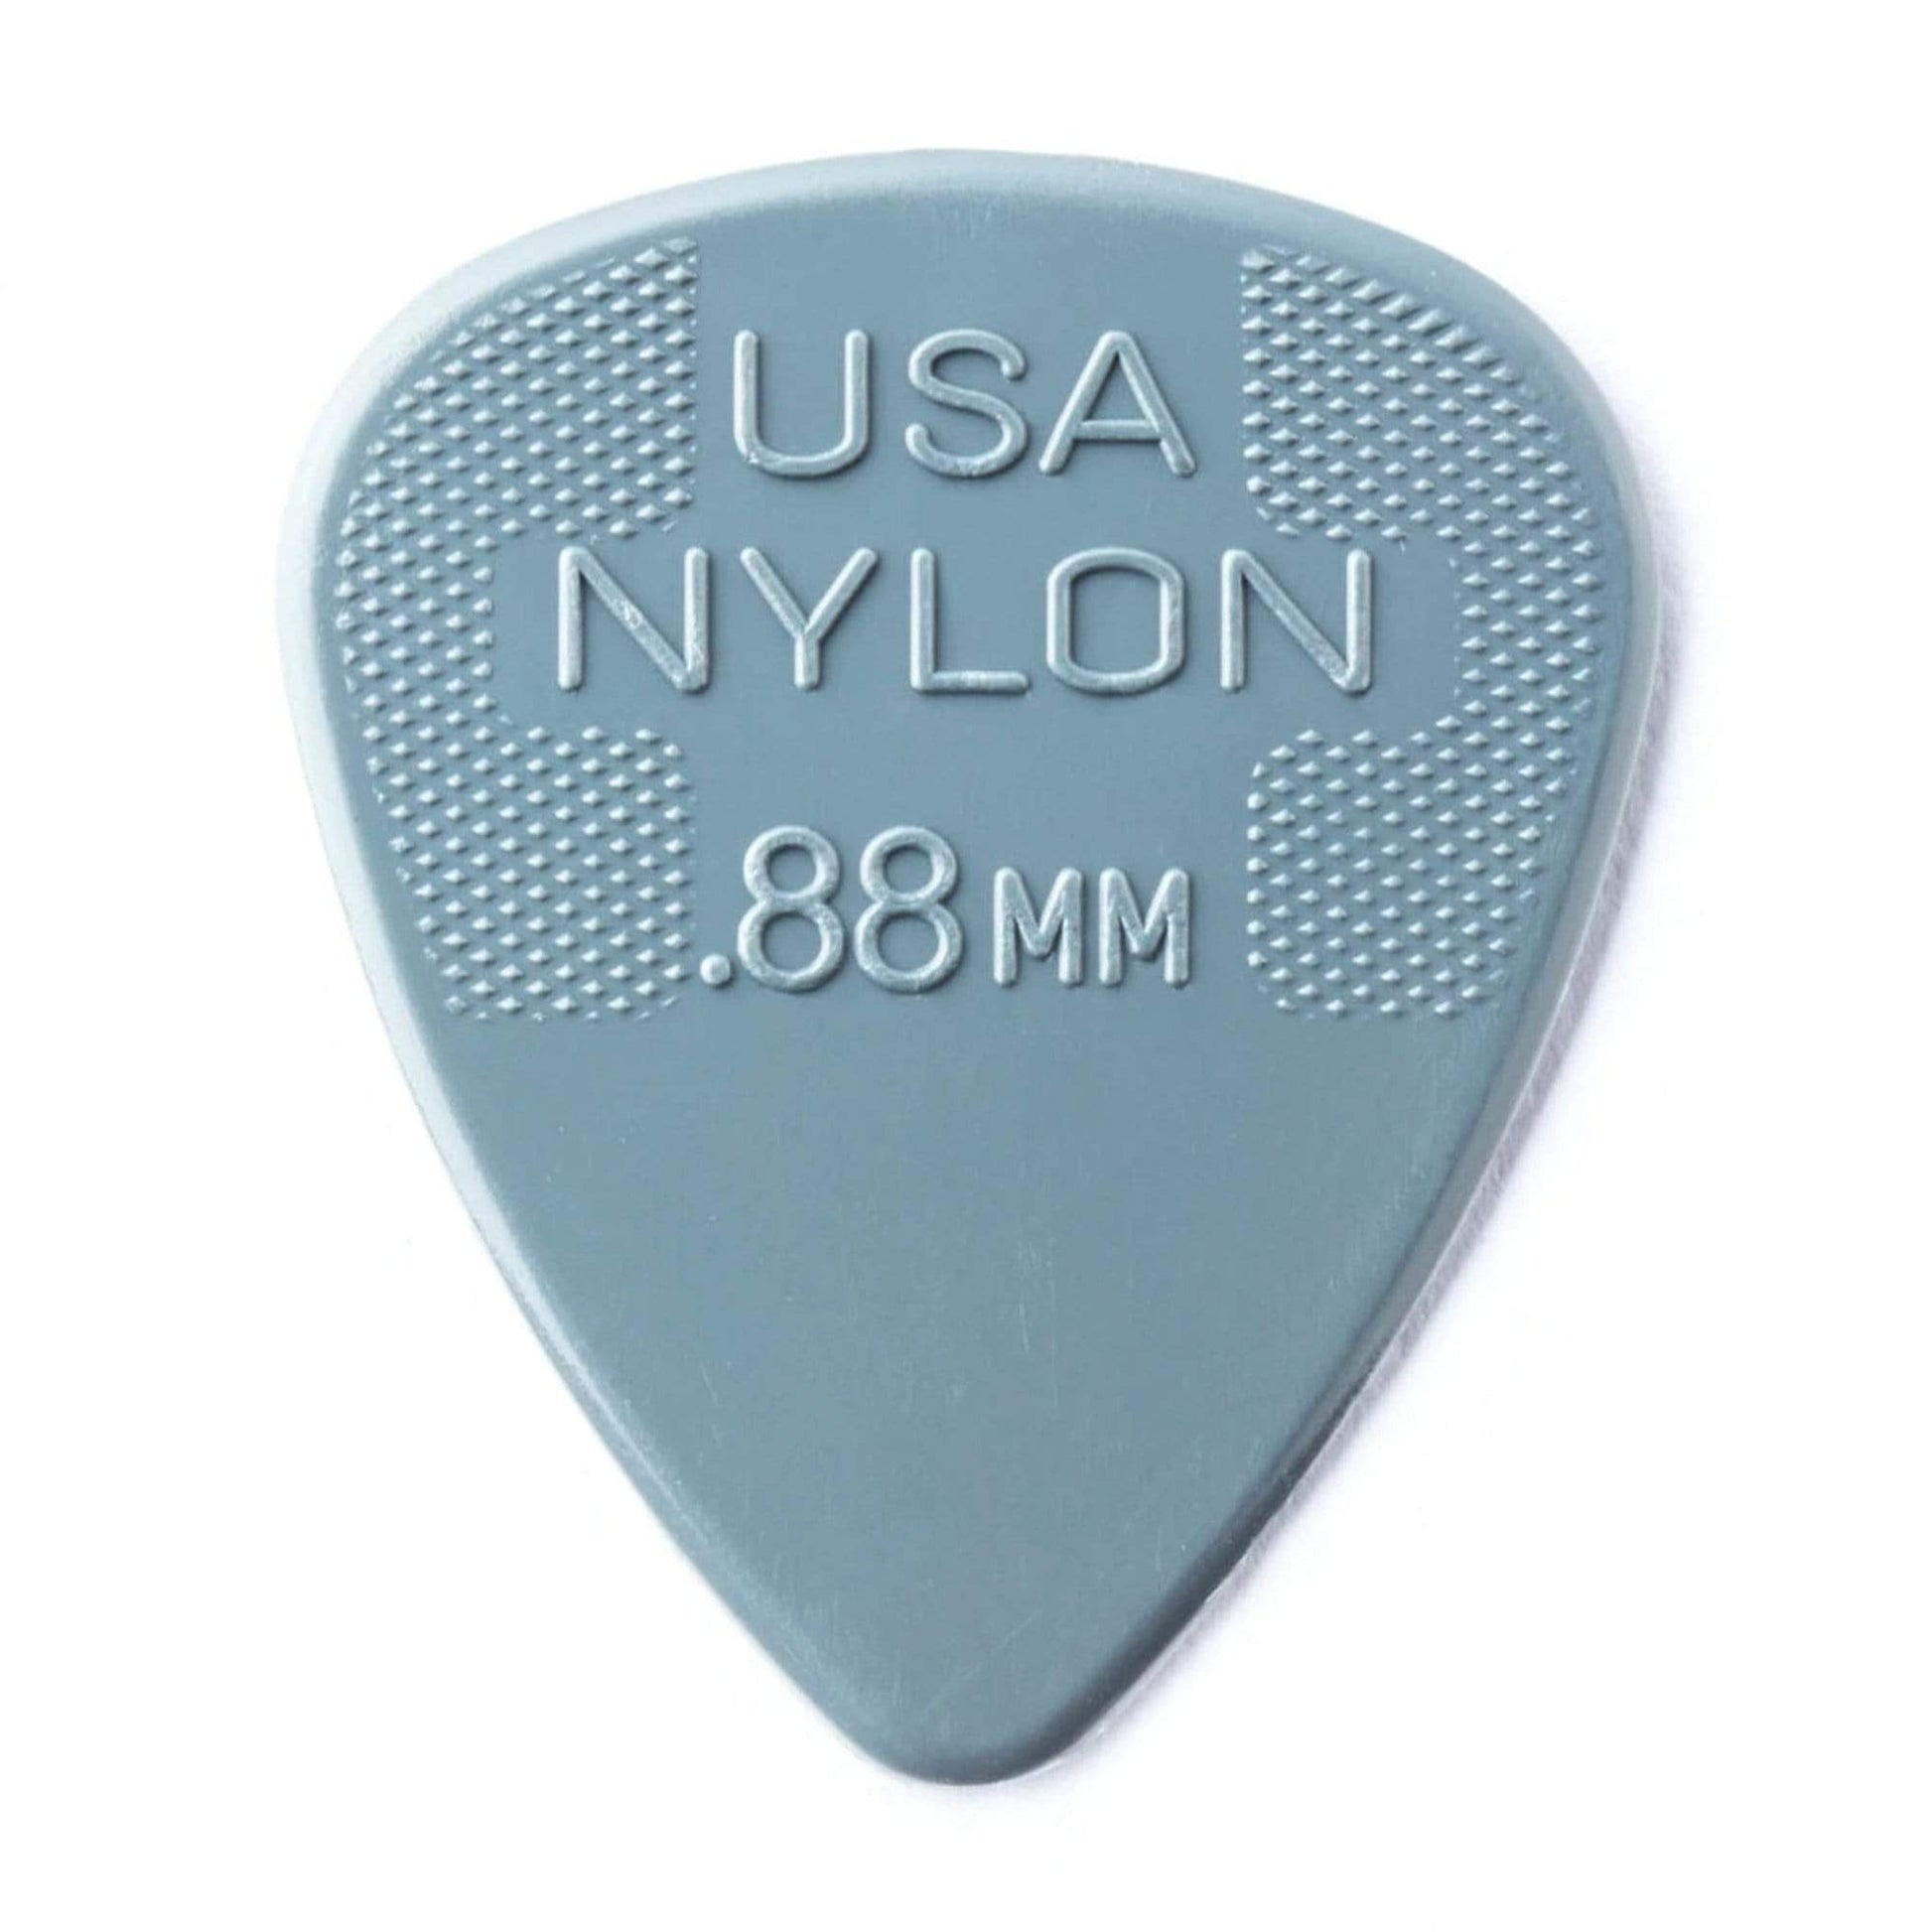 Dunlop Nylon Standard .88mm 3 Pack (36) Bundle Accessories / Picks